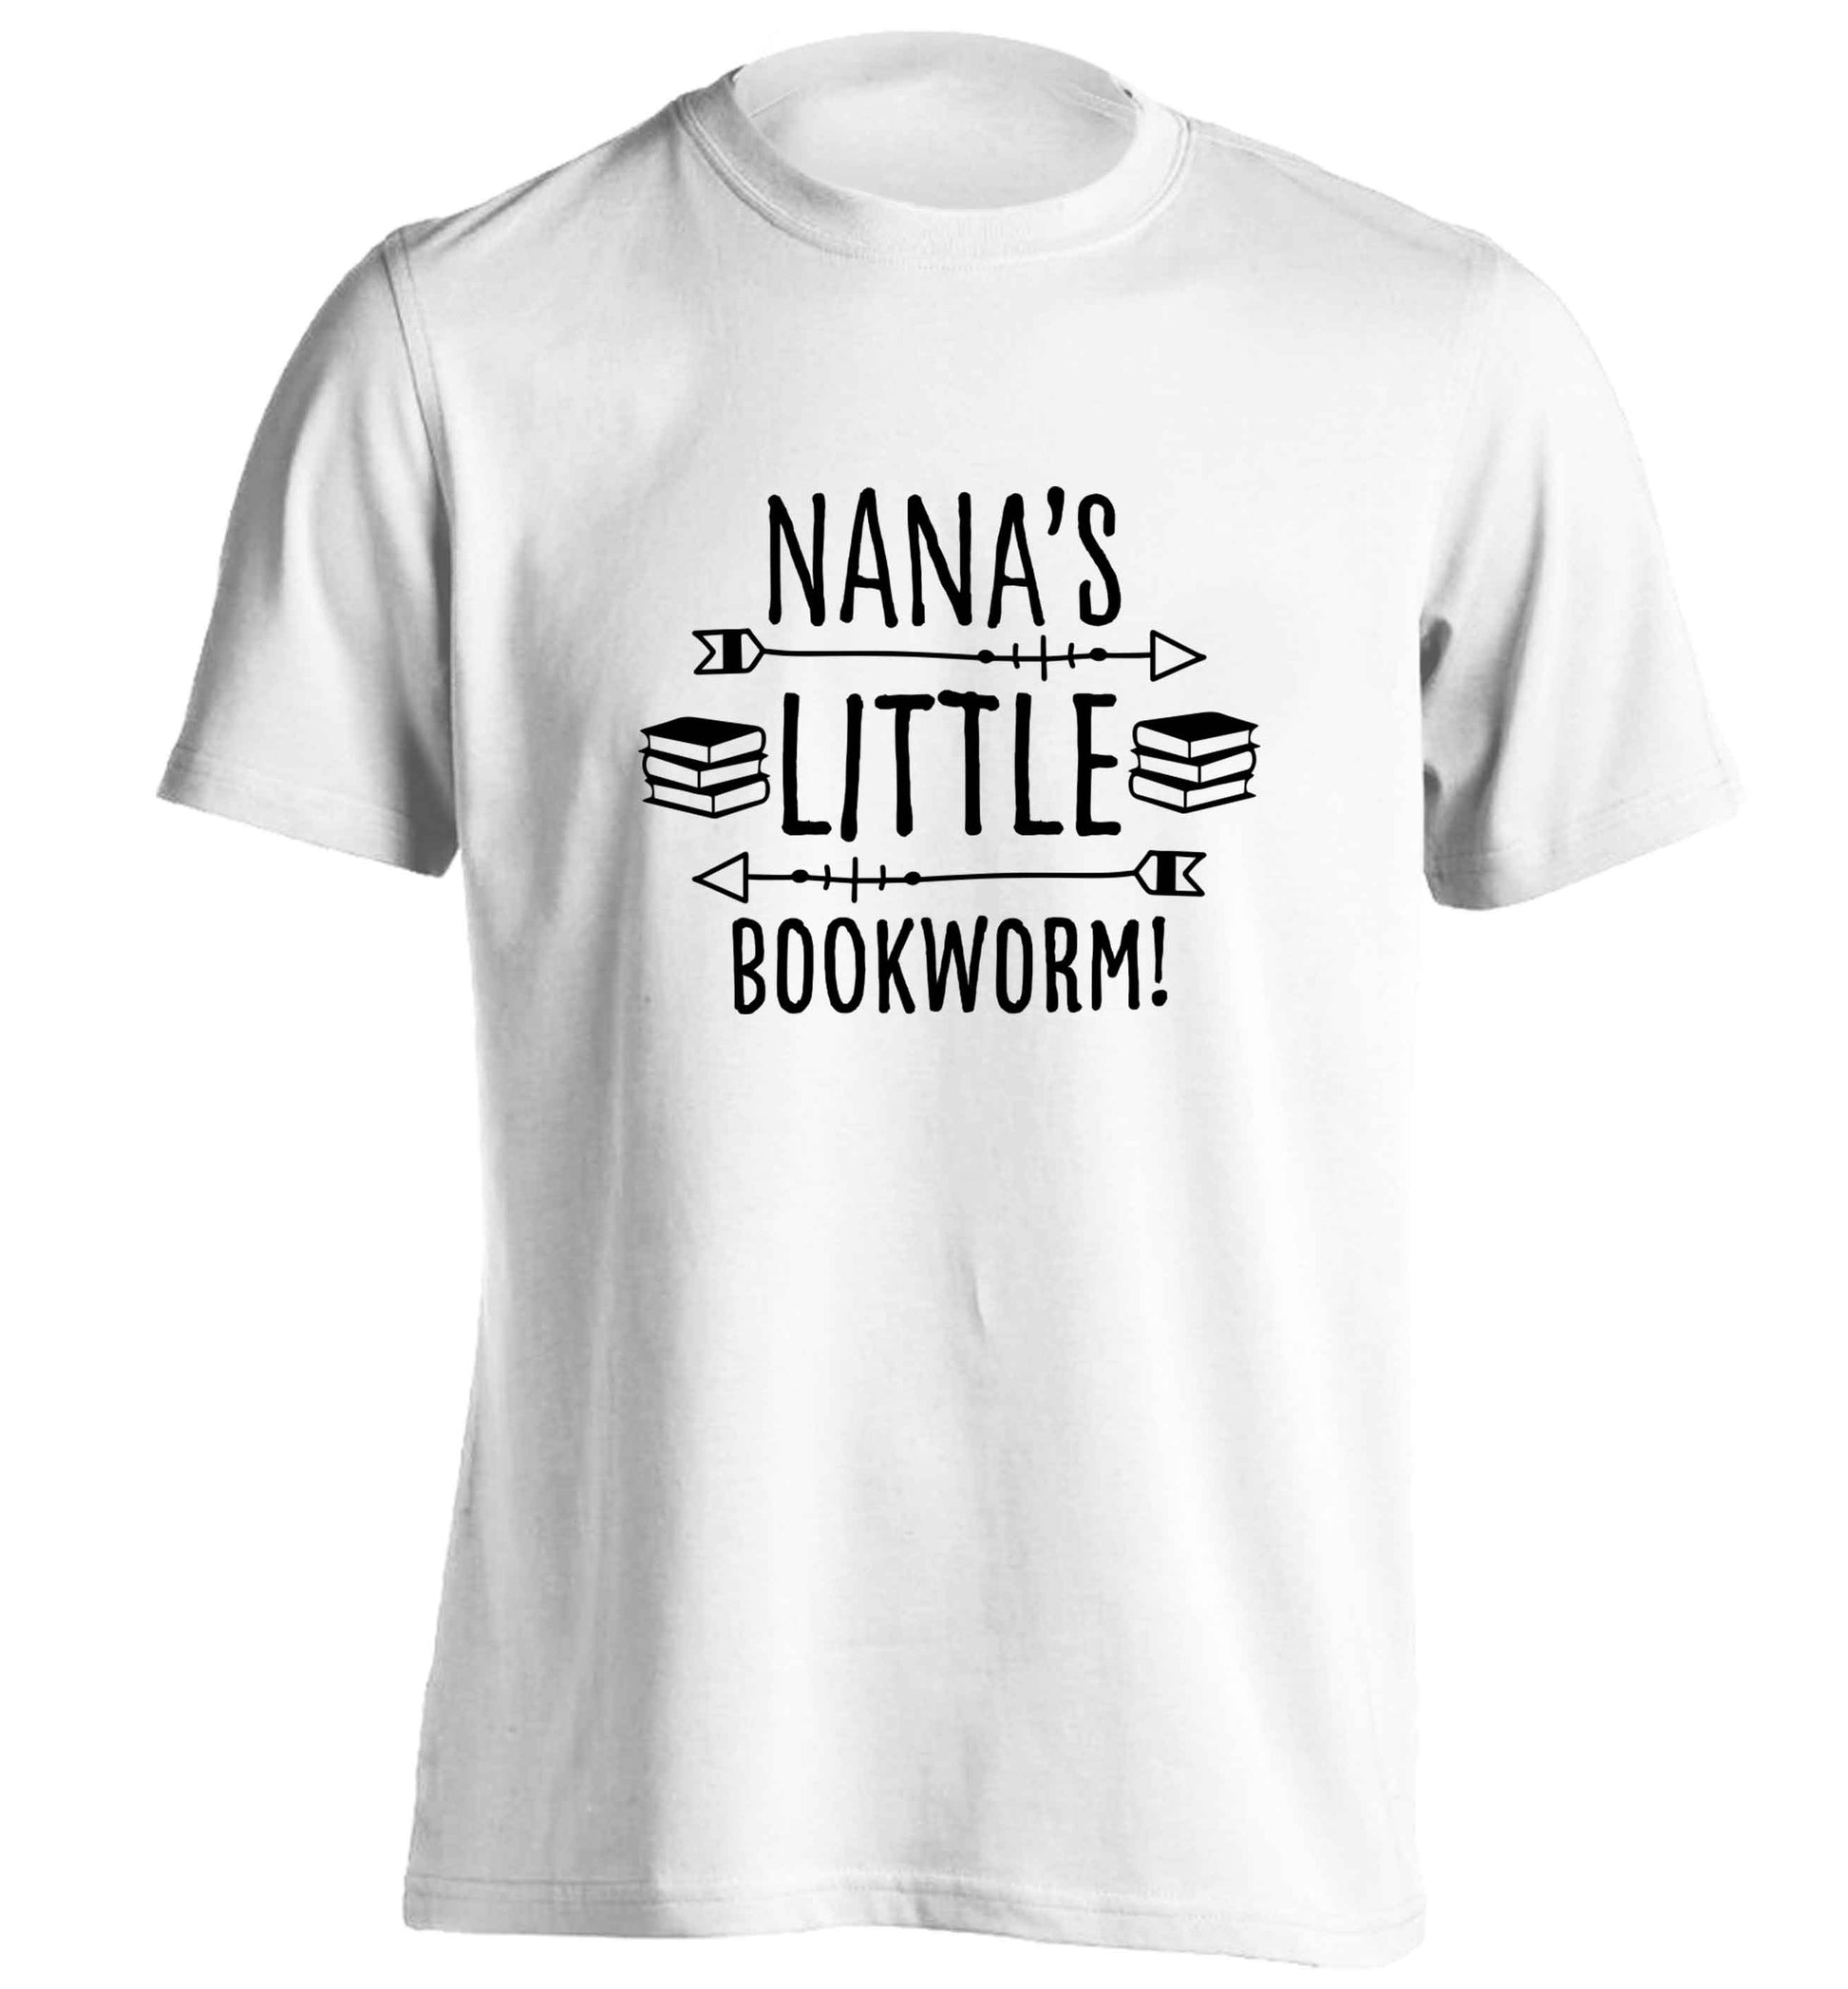 Nana's little bookworm adults unisex white Tshirt 2XL